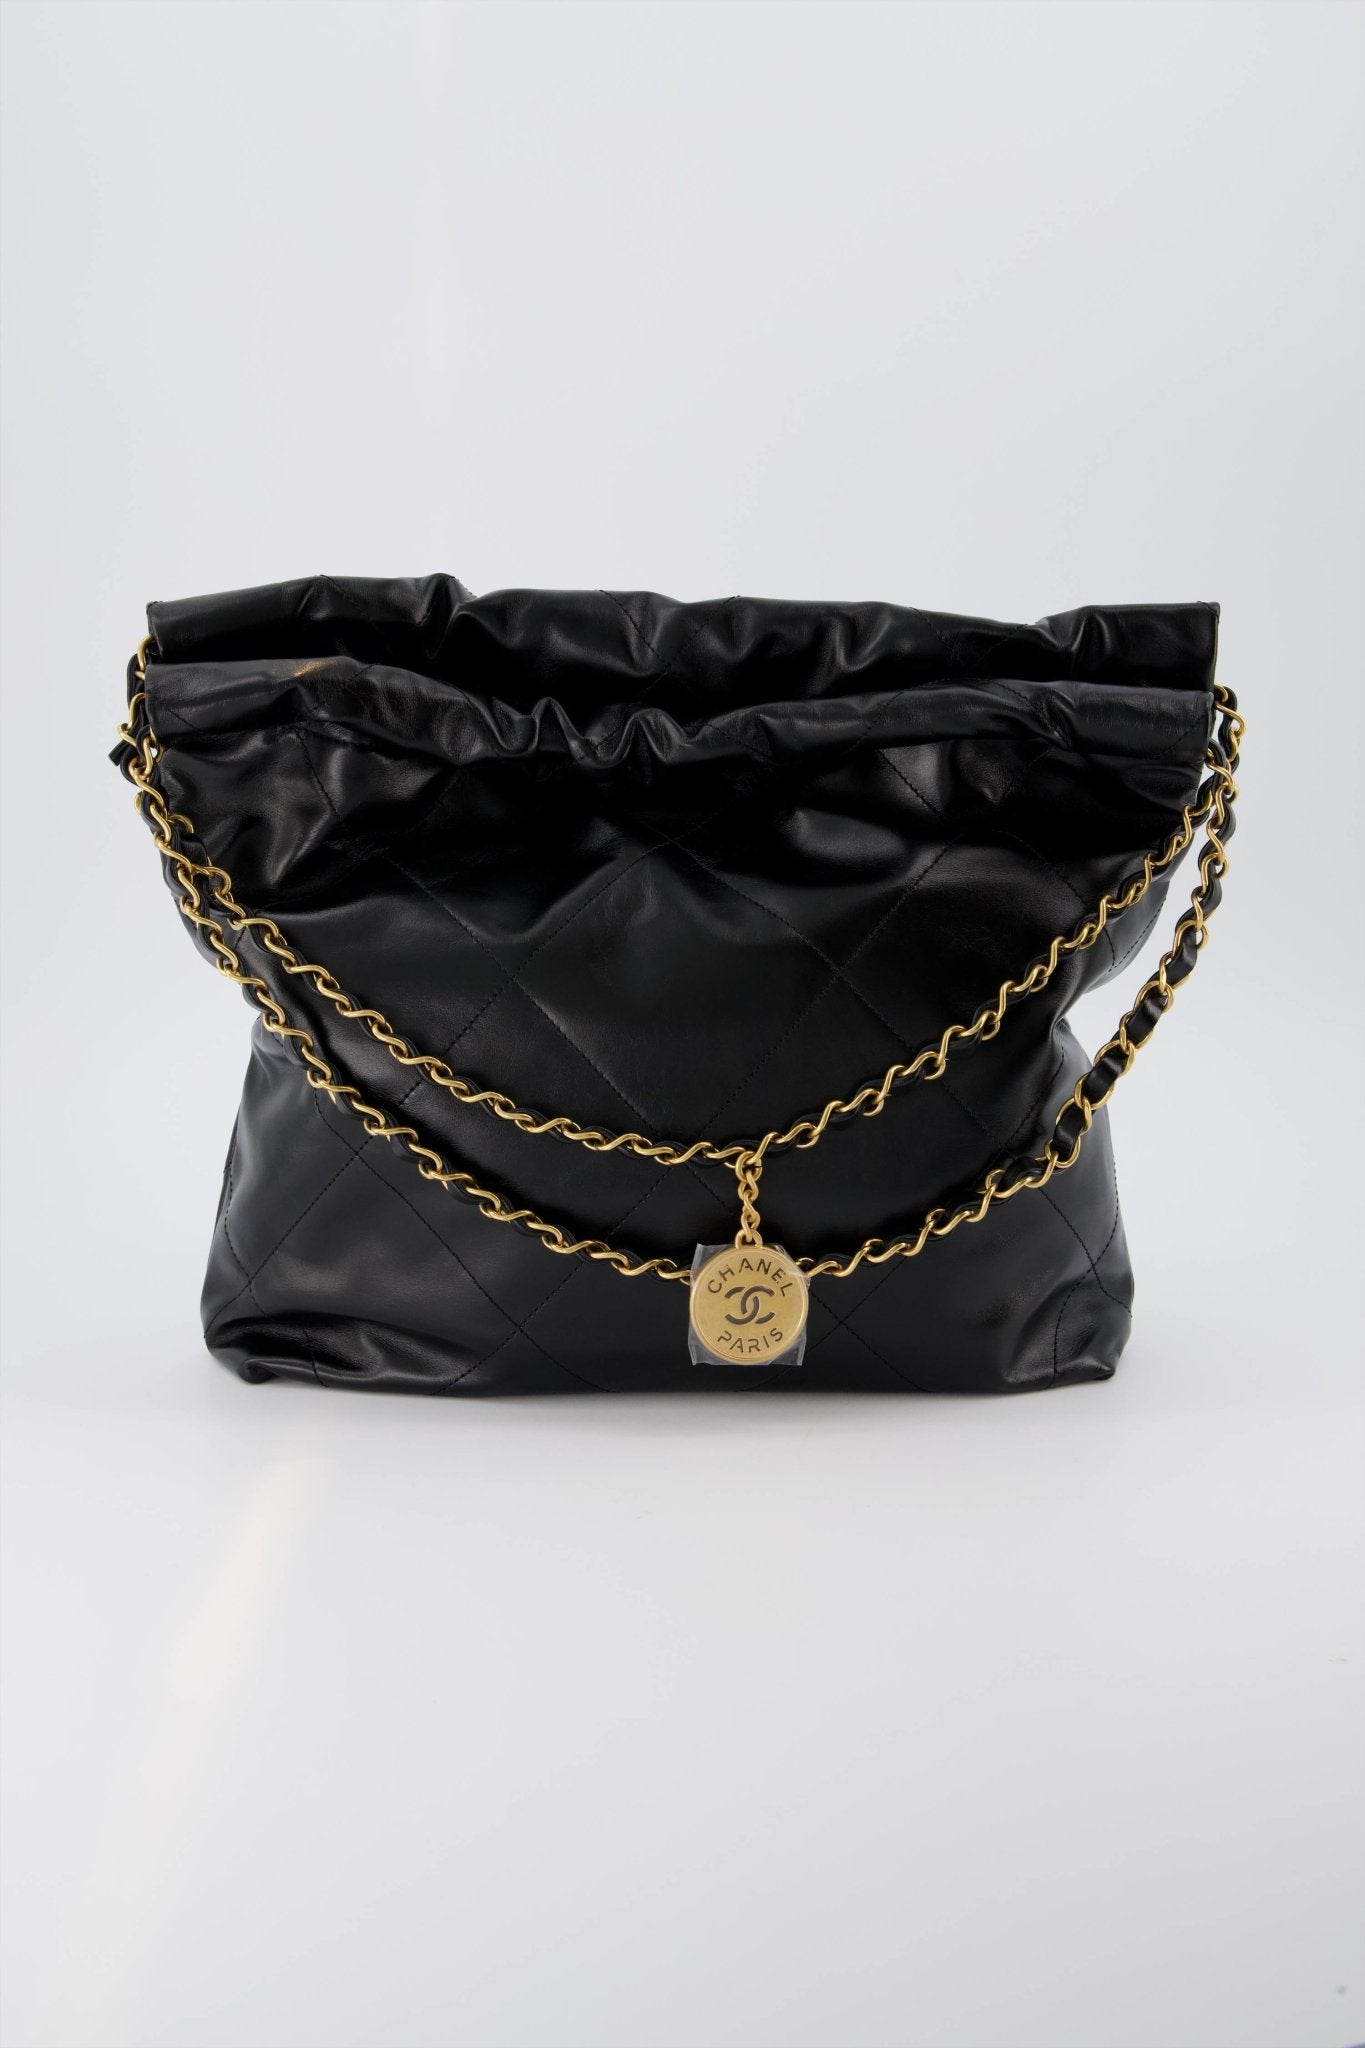 chanel gold purse handbag